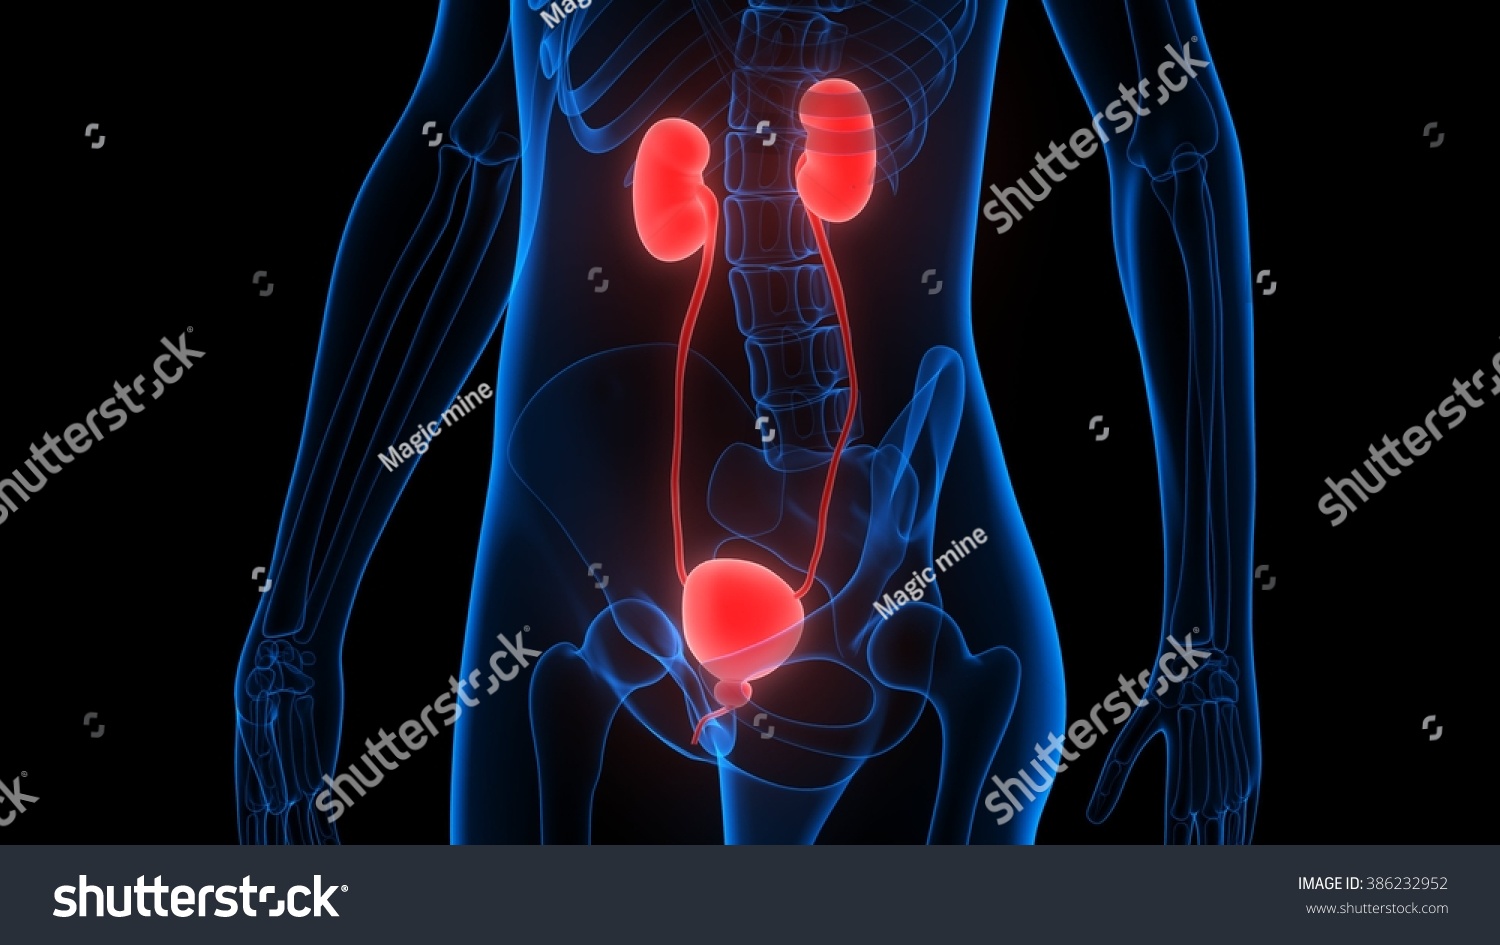 Human Body Organs (Kidneys) Stock Photo 386232952 : Shutterstock